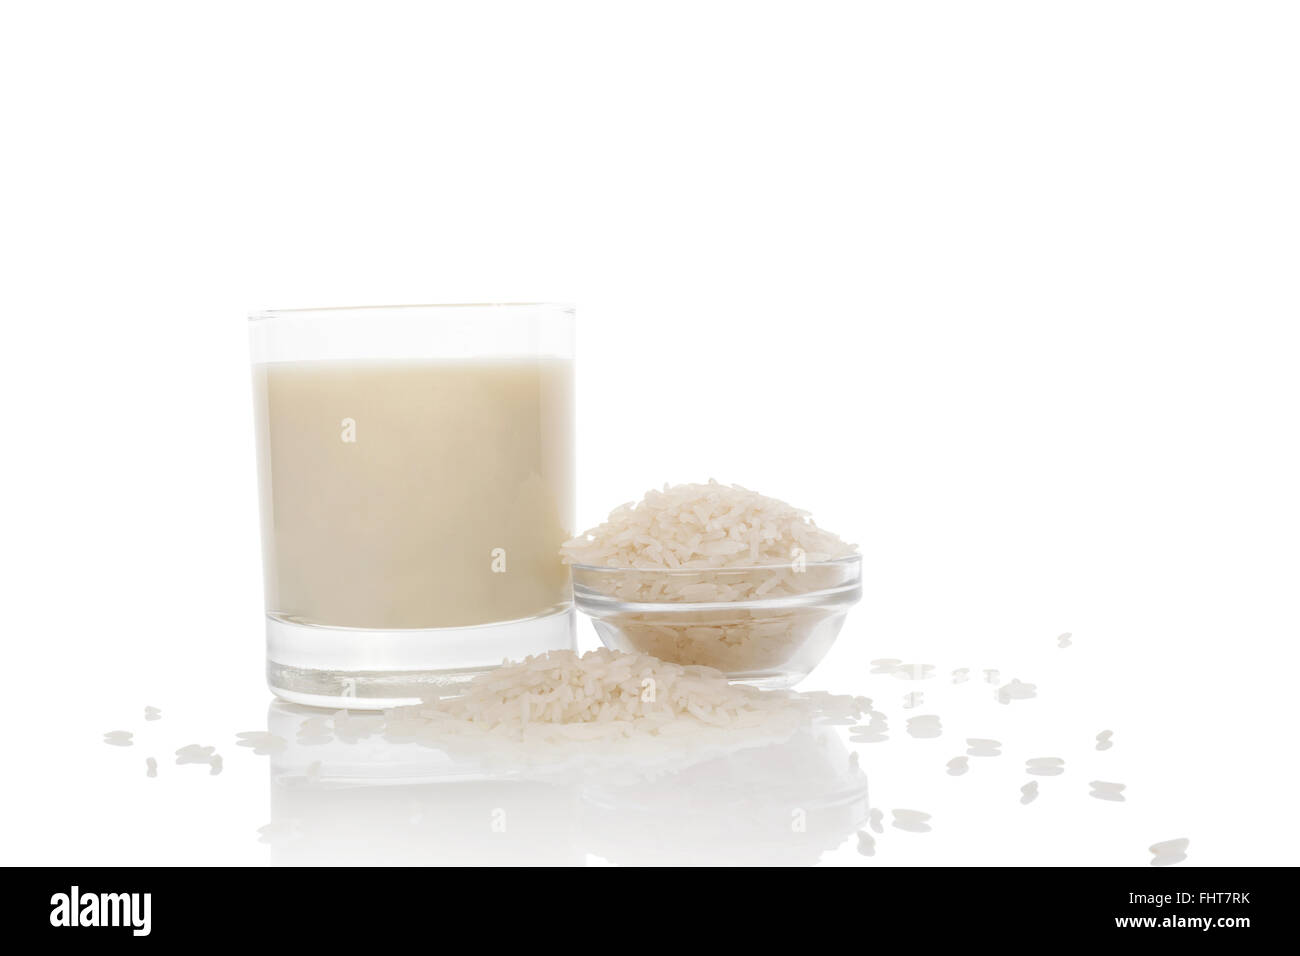 Rice milk. Stock Photo